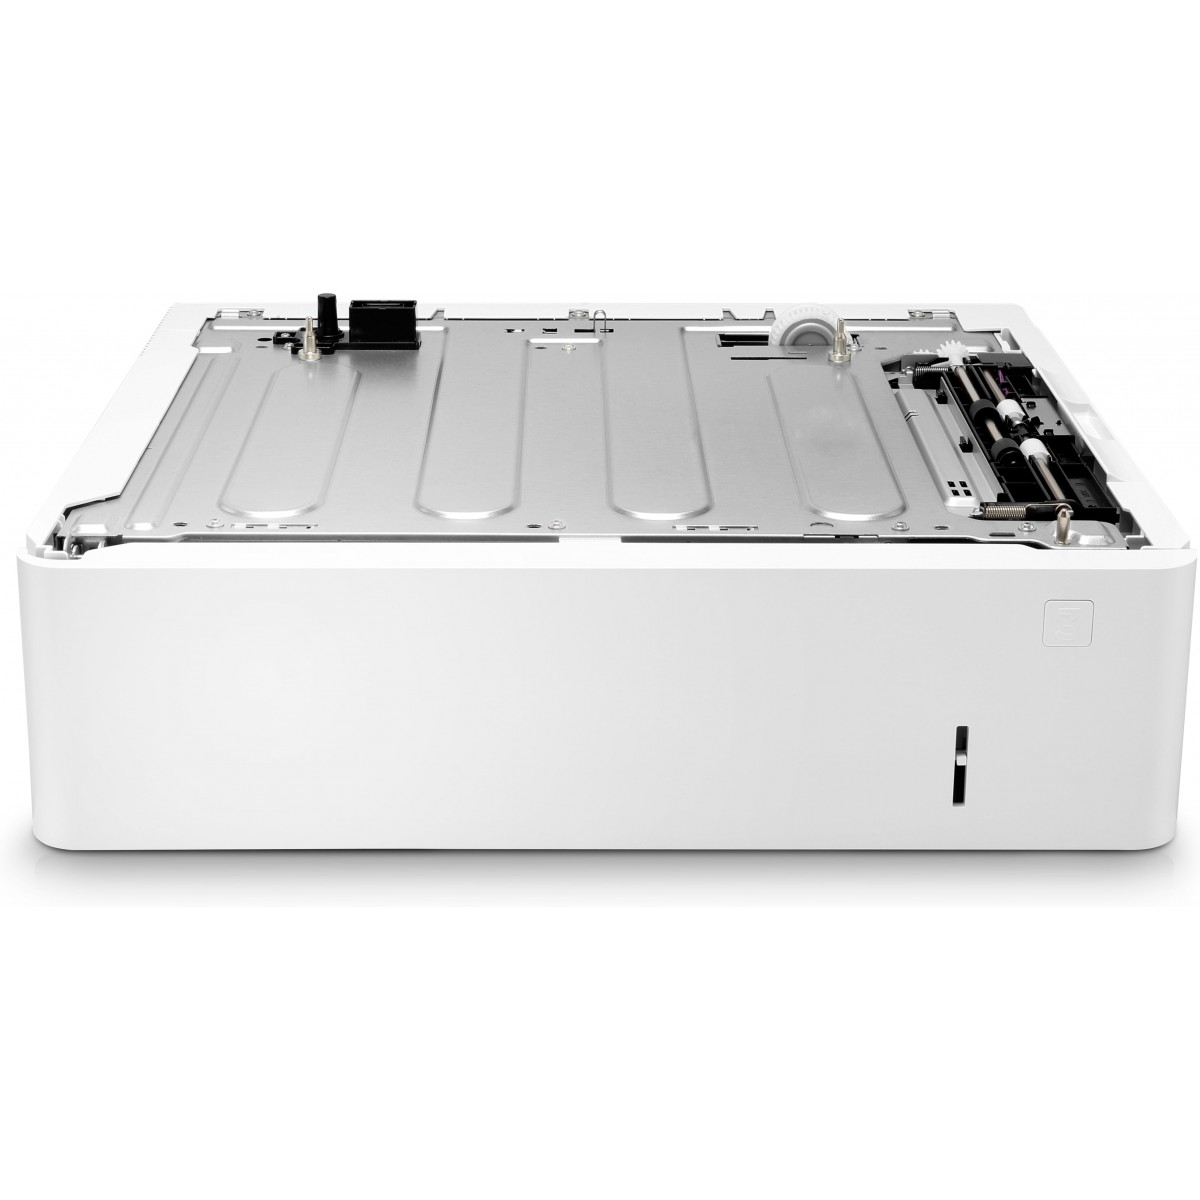 HP LaserJet Envelope Feeder - Auto document feeder (ADF) - HP - Color LaserJet Enterprise M607 - M608 - M609 - LaserJet Enterpri